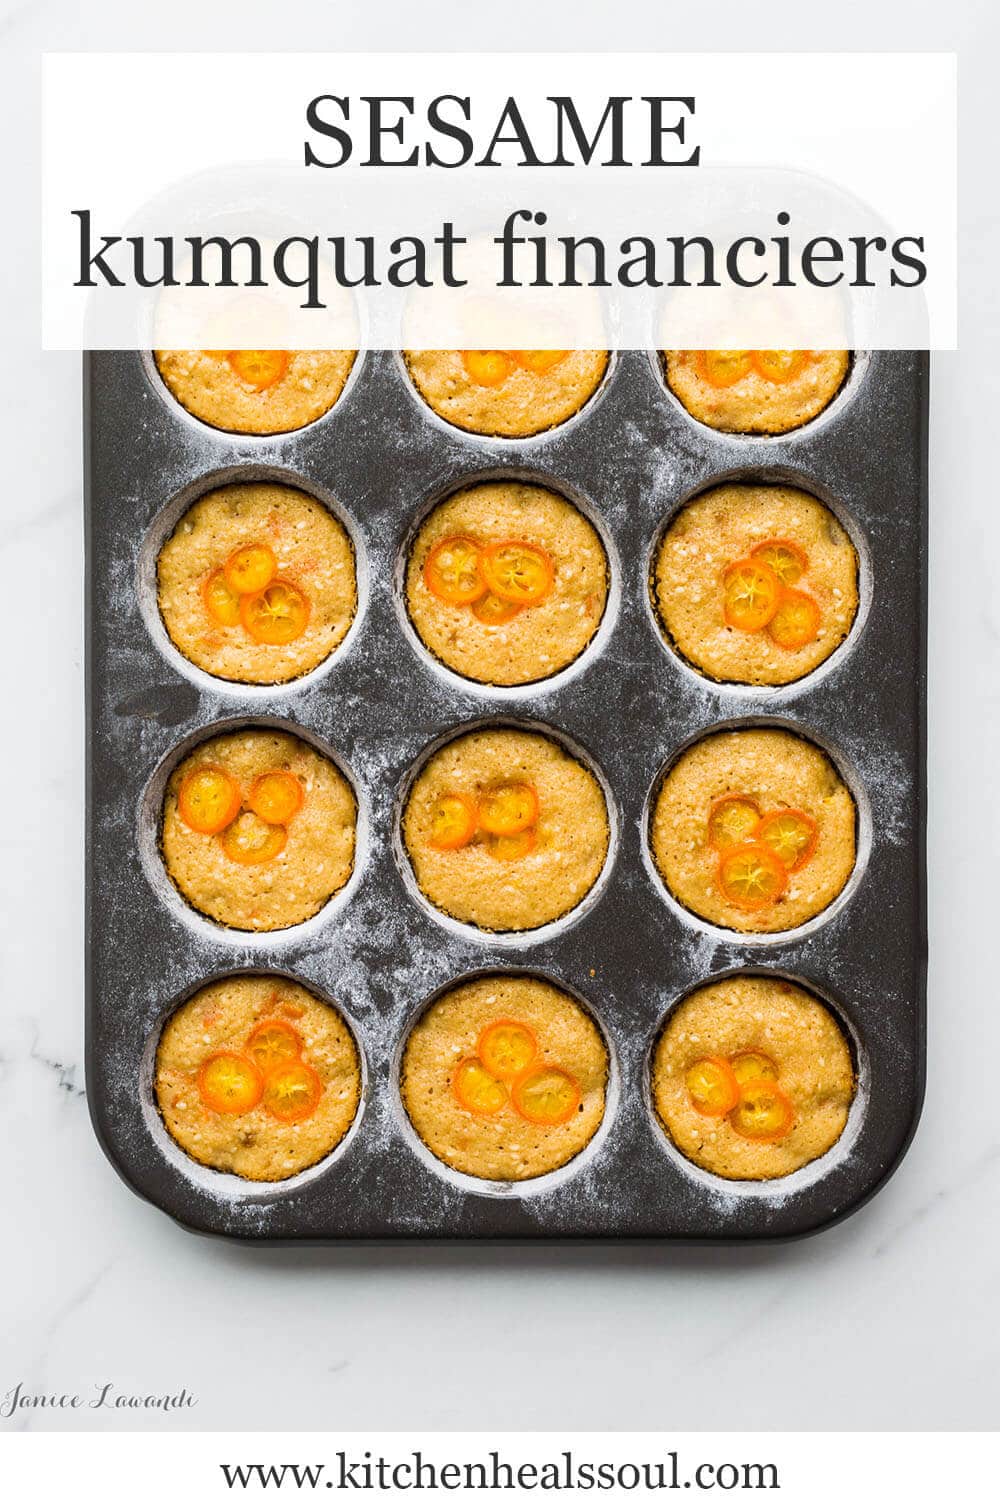 A muffin pan of sesame kumquat financiers garnished with thinly sliced kumquats